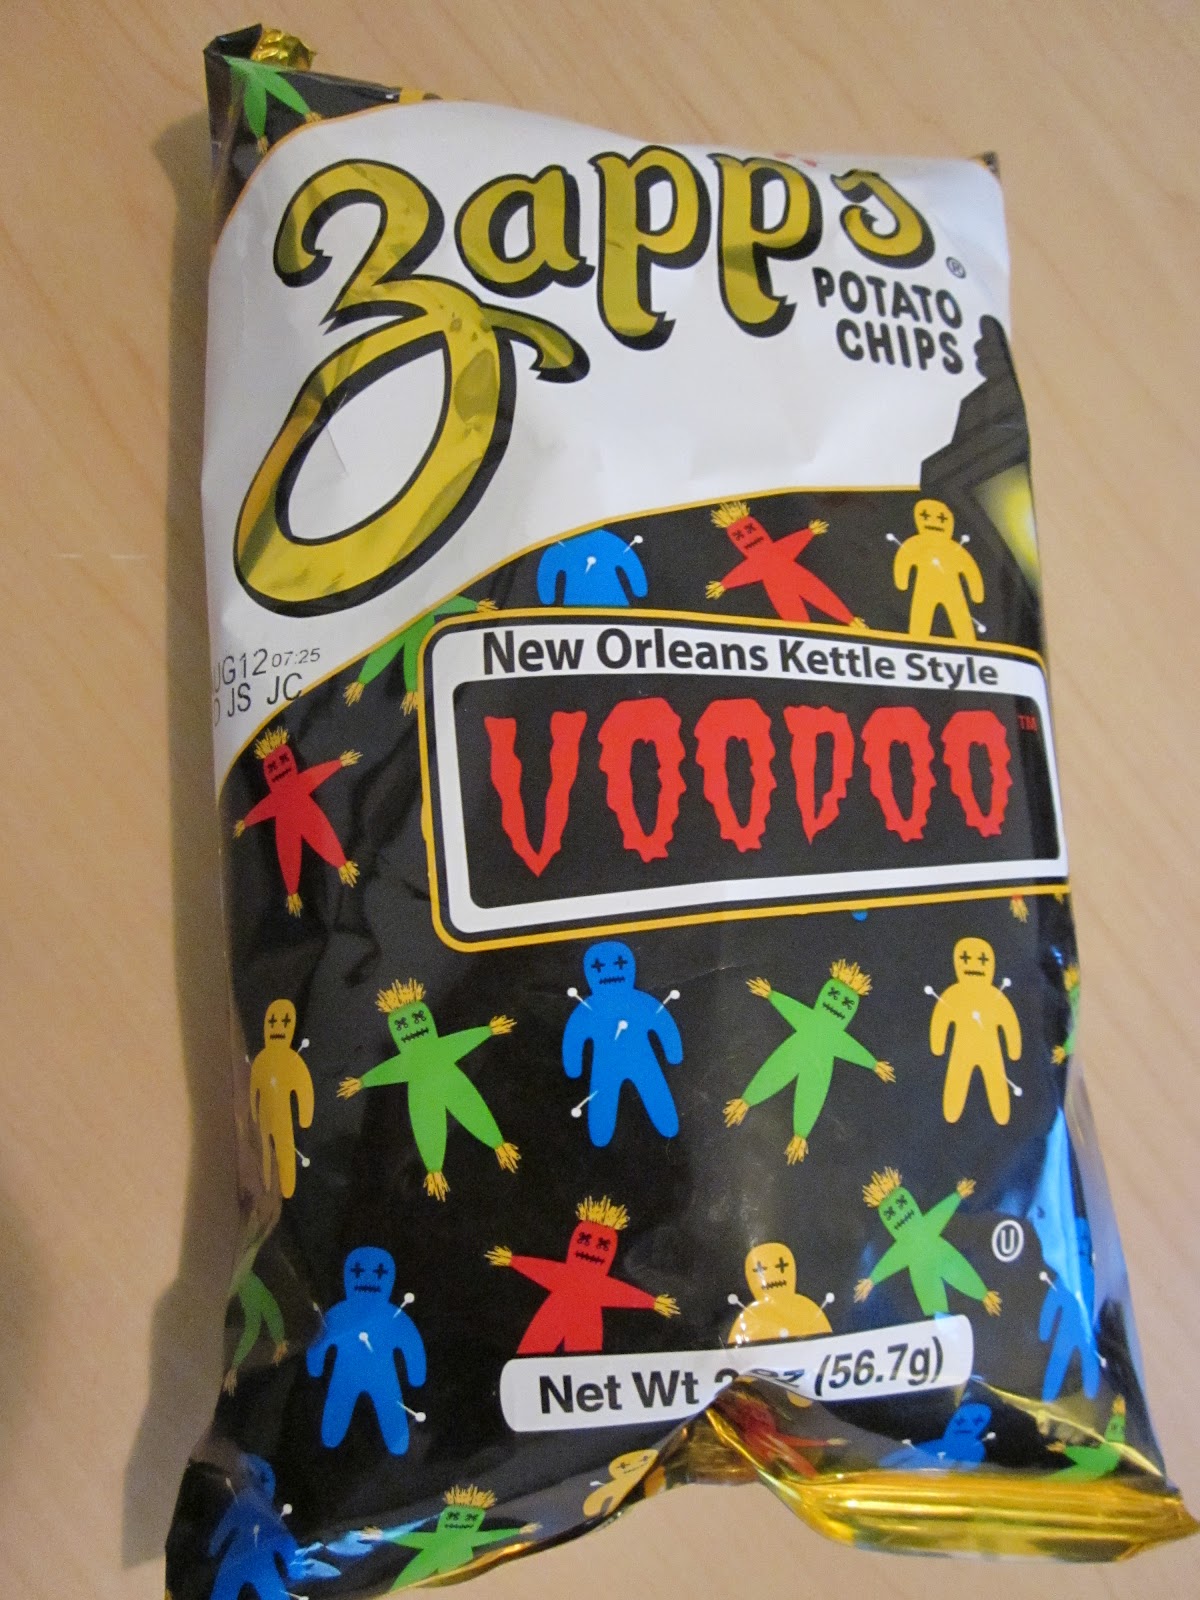 Strange Chips: Zapp's Voodoo New Orleans Kettle Style